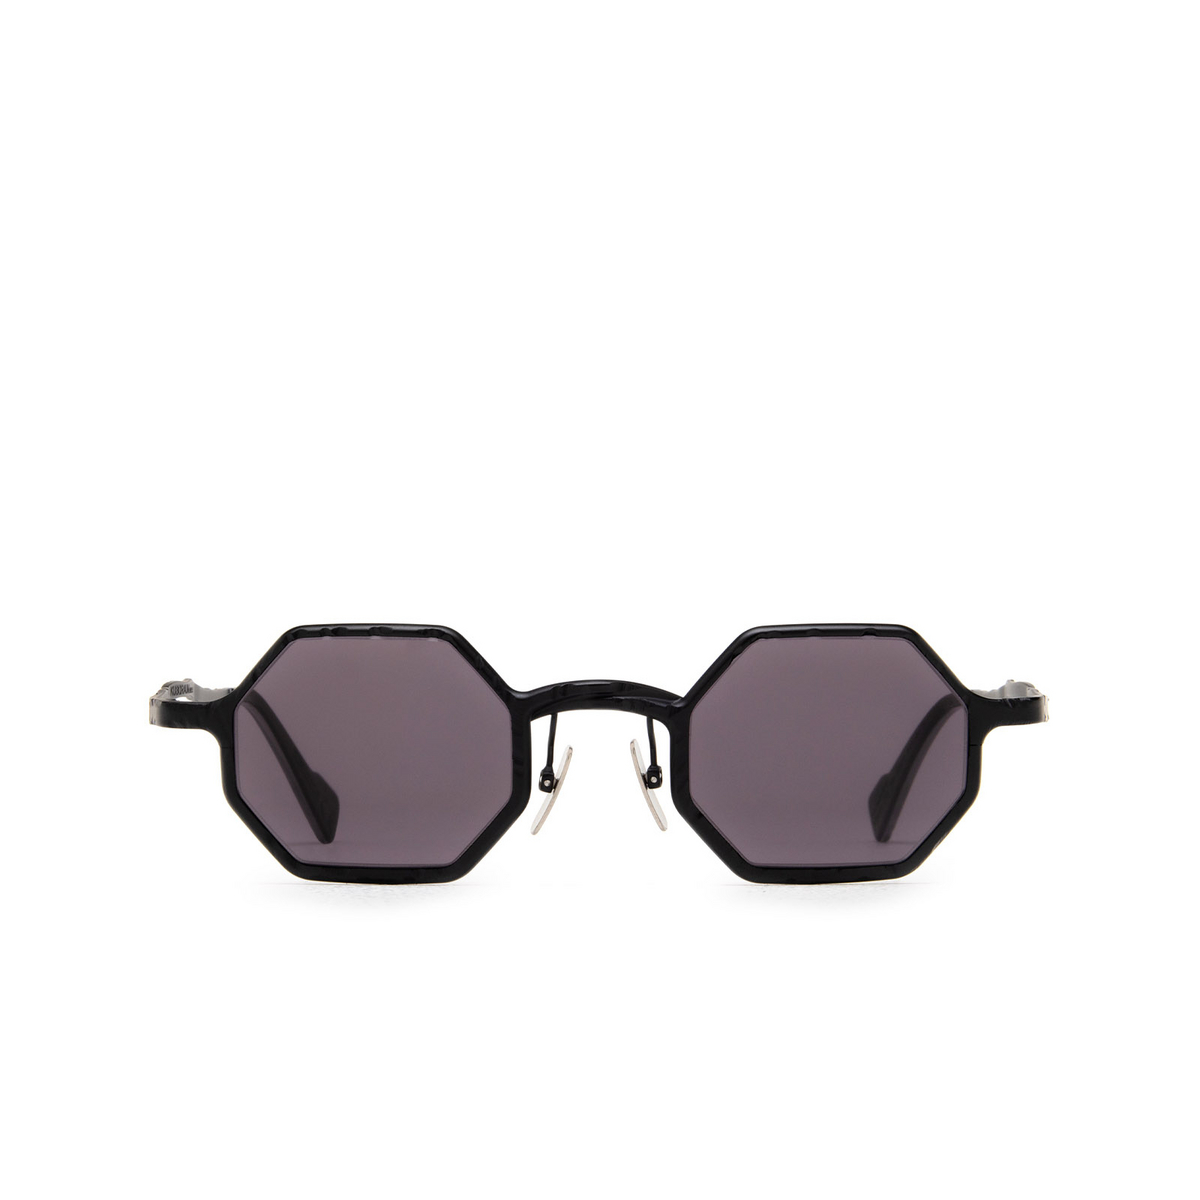 Kuboraum Z19 Sunglasses BM Black Matt - front view